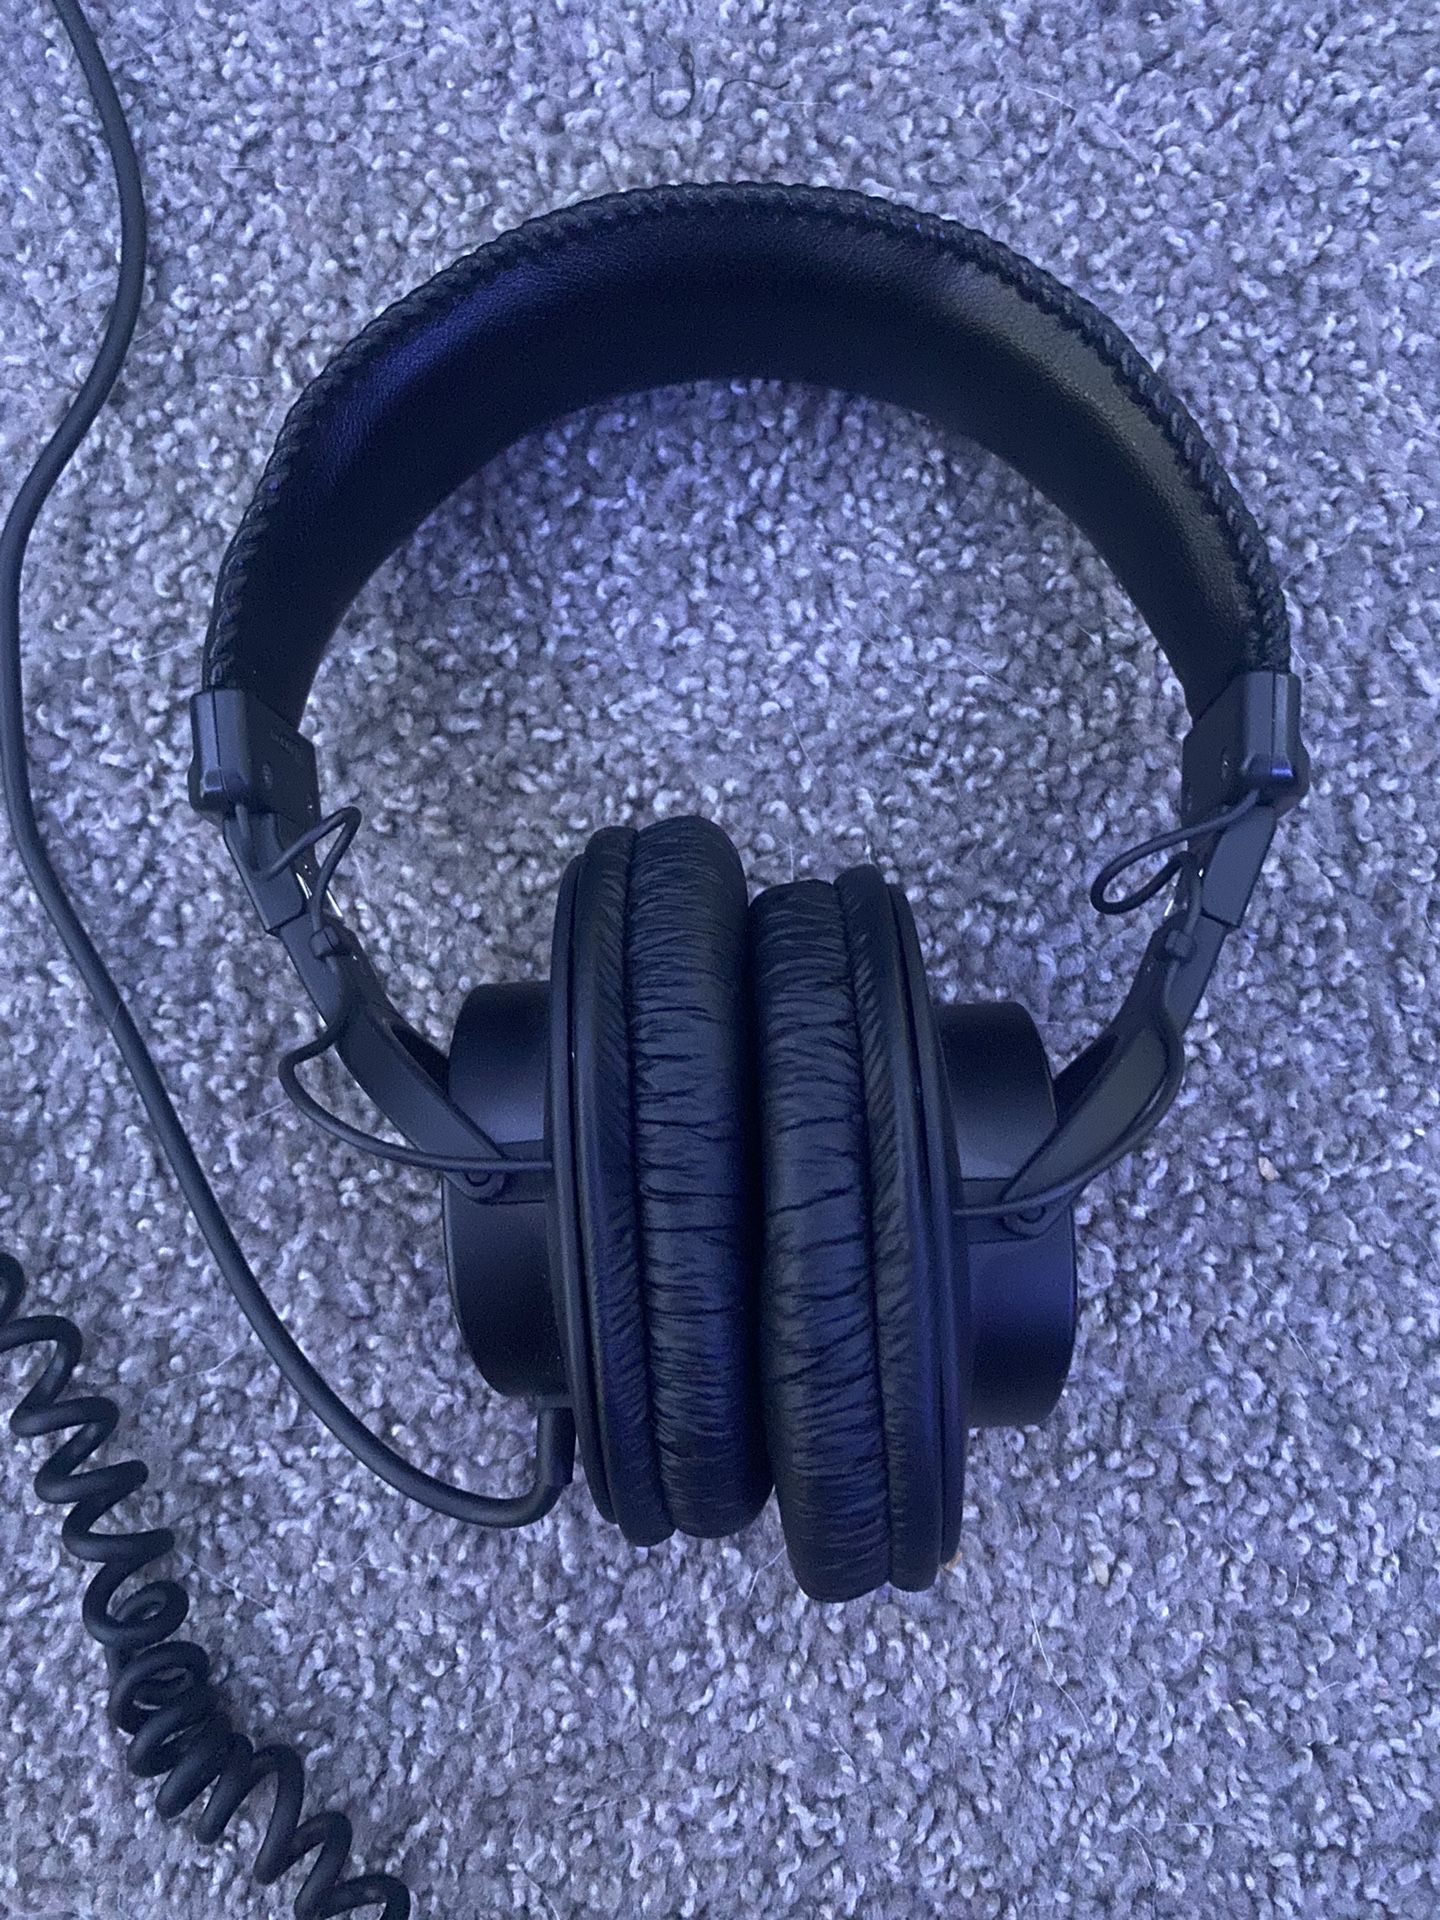 Sony MDR-7506 Professional Studio Headphones